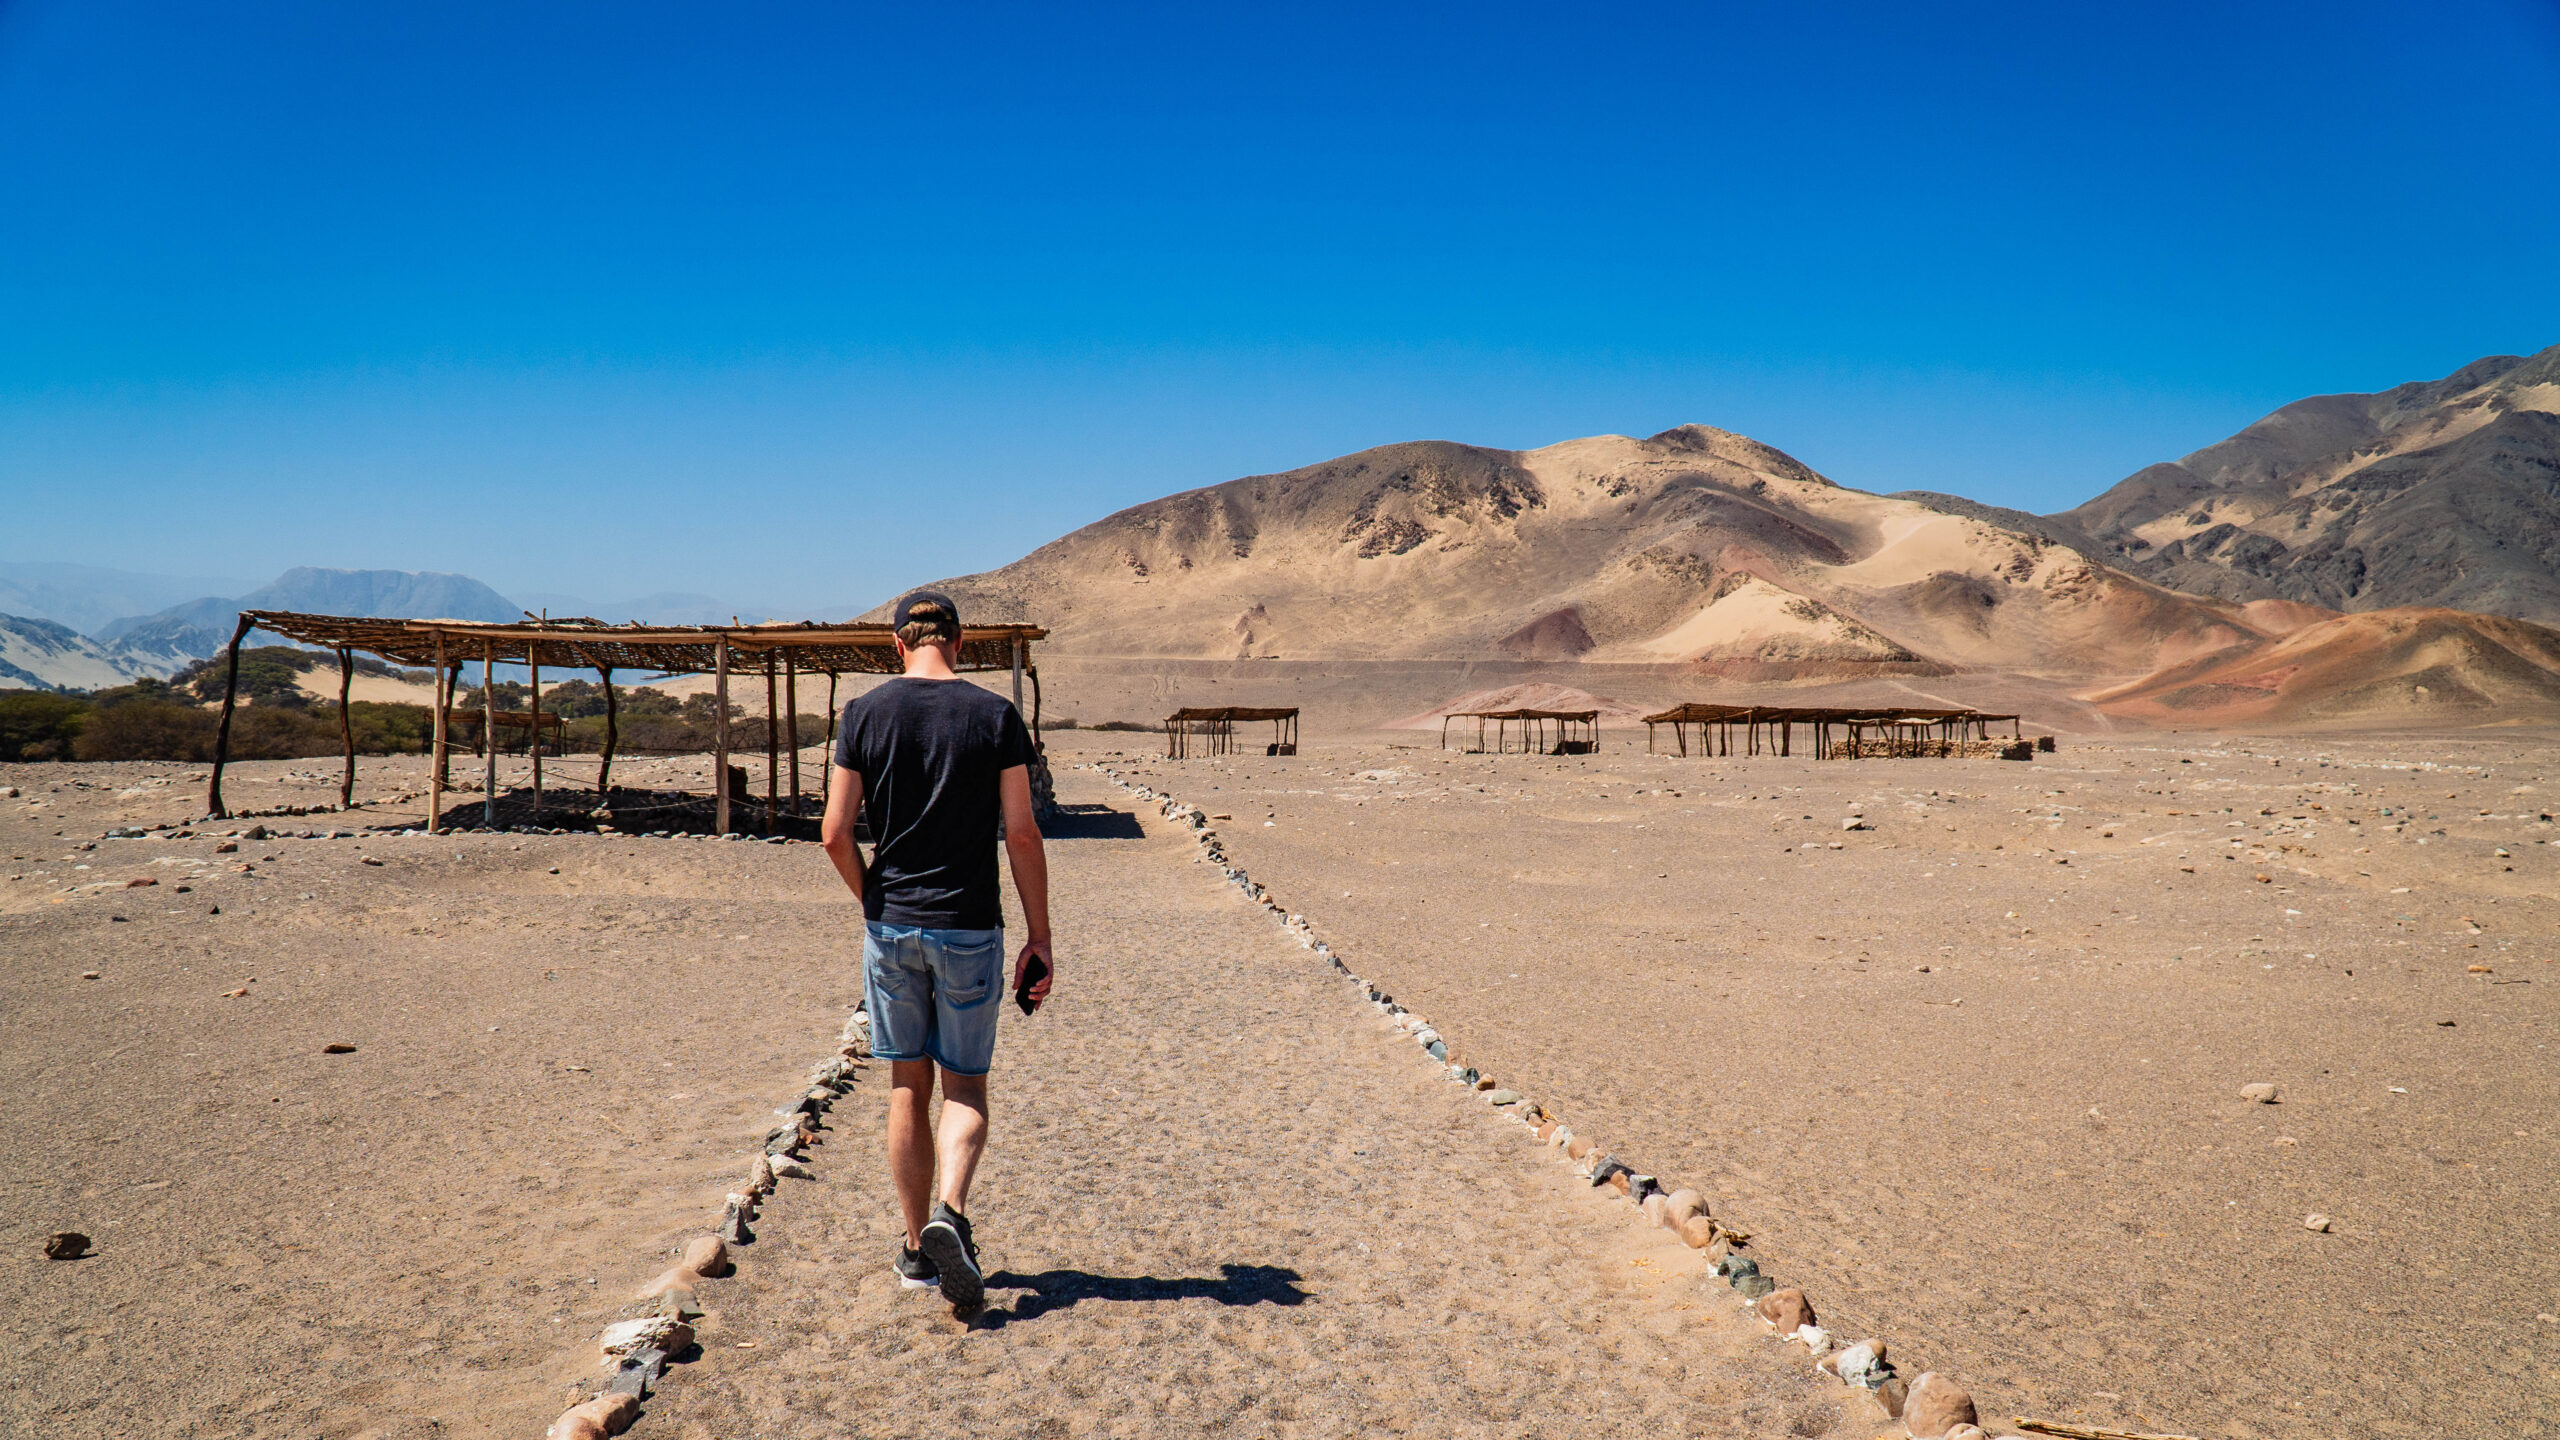 Chauchilla, Nazca, Peru